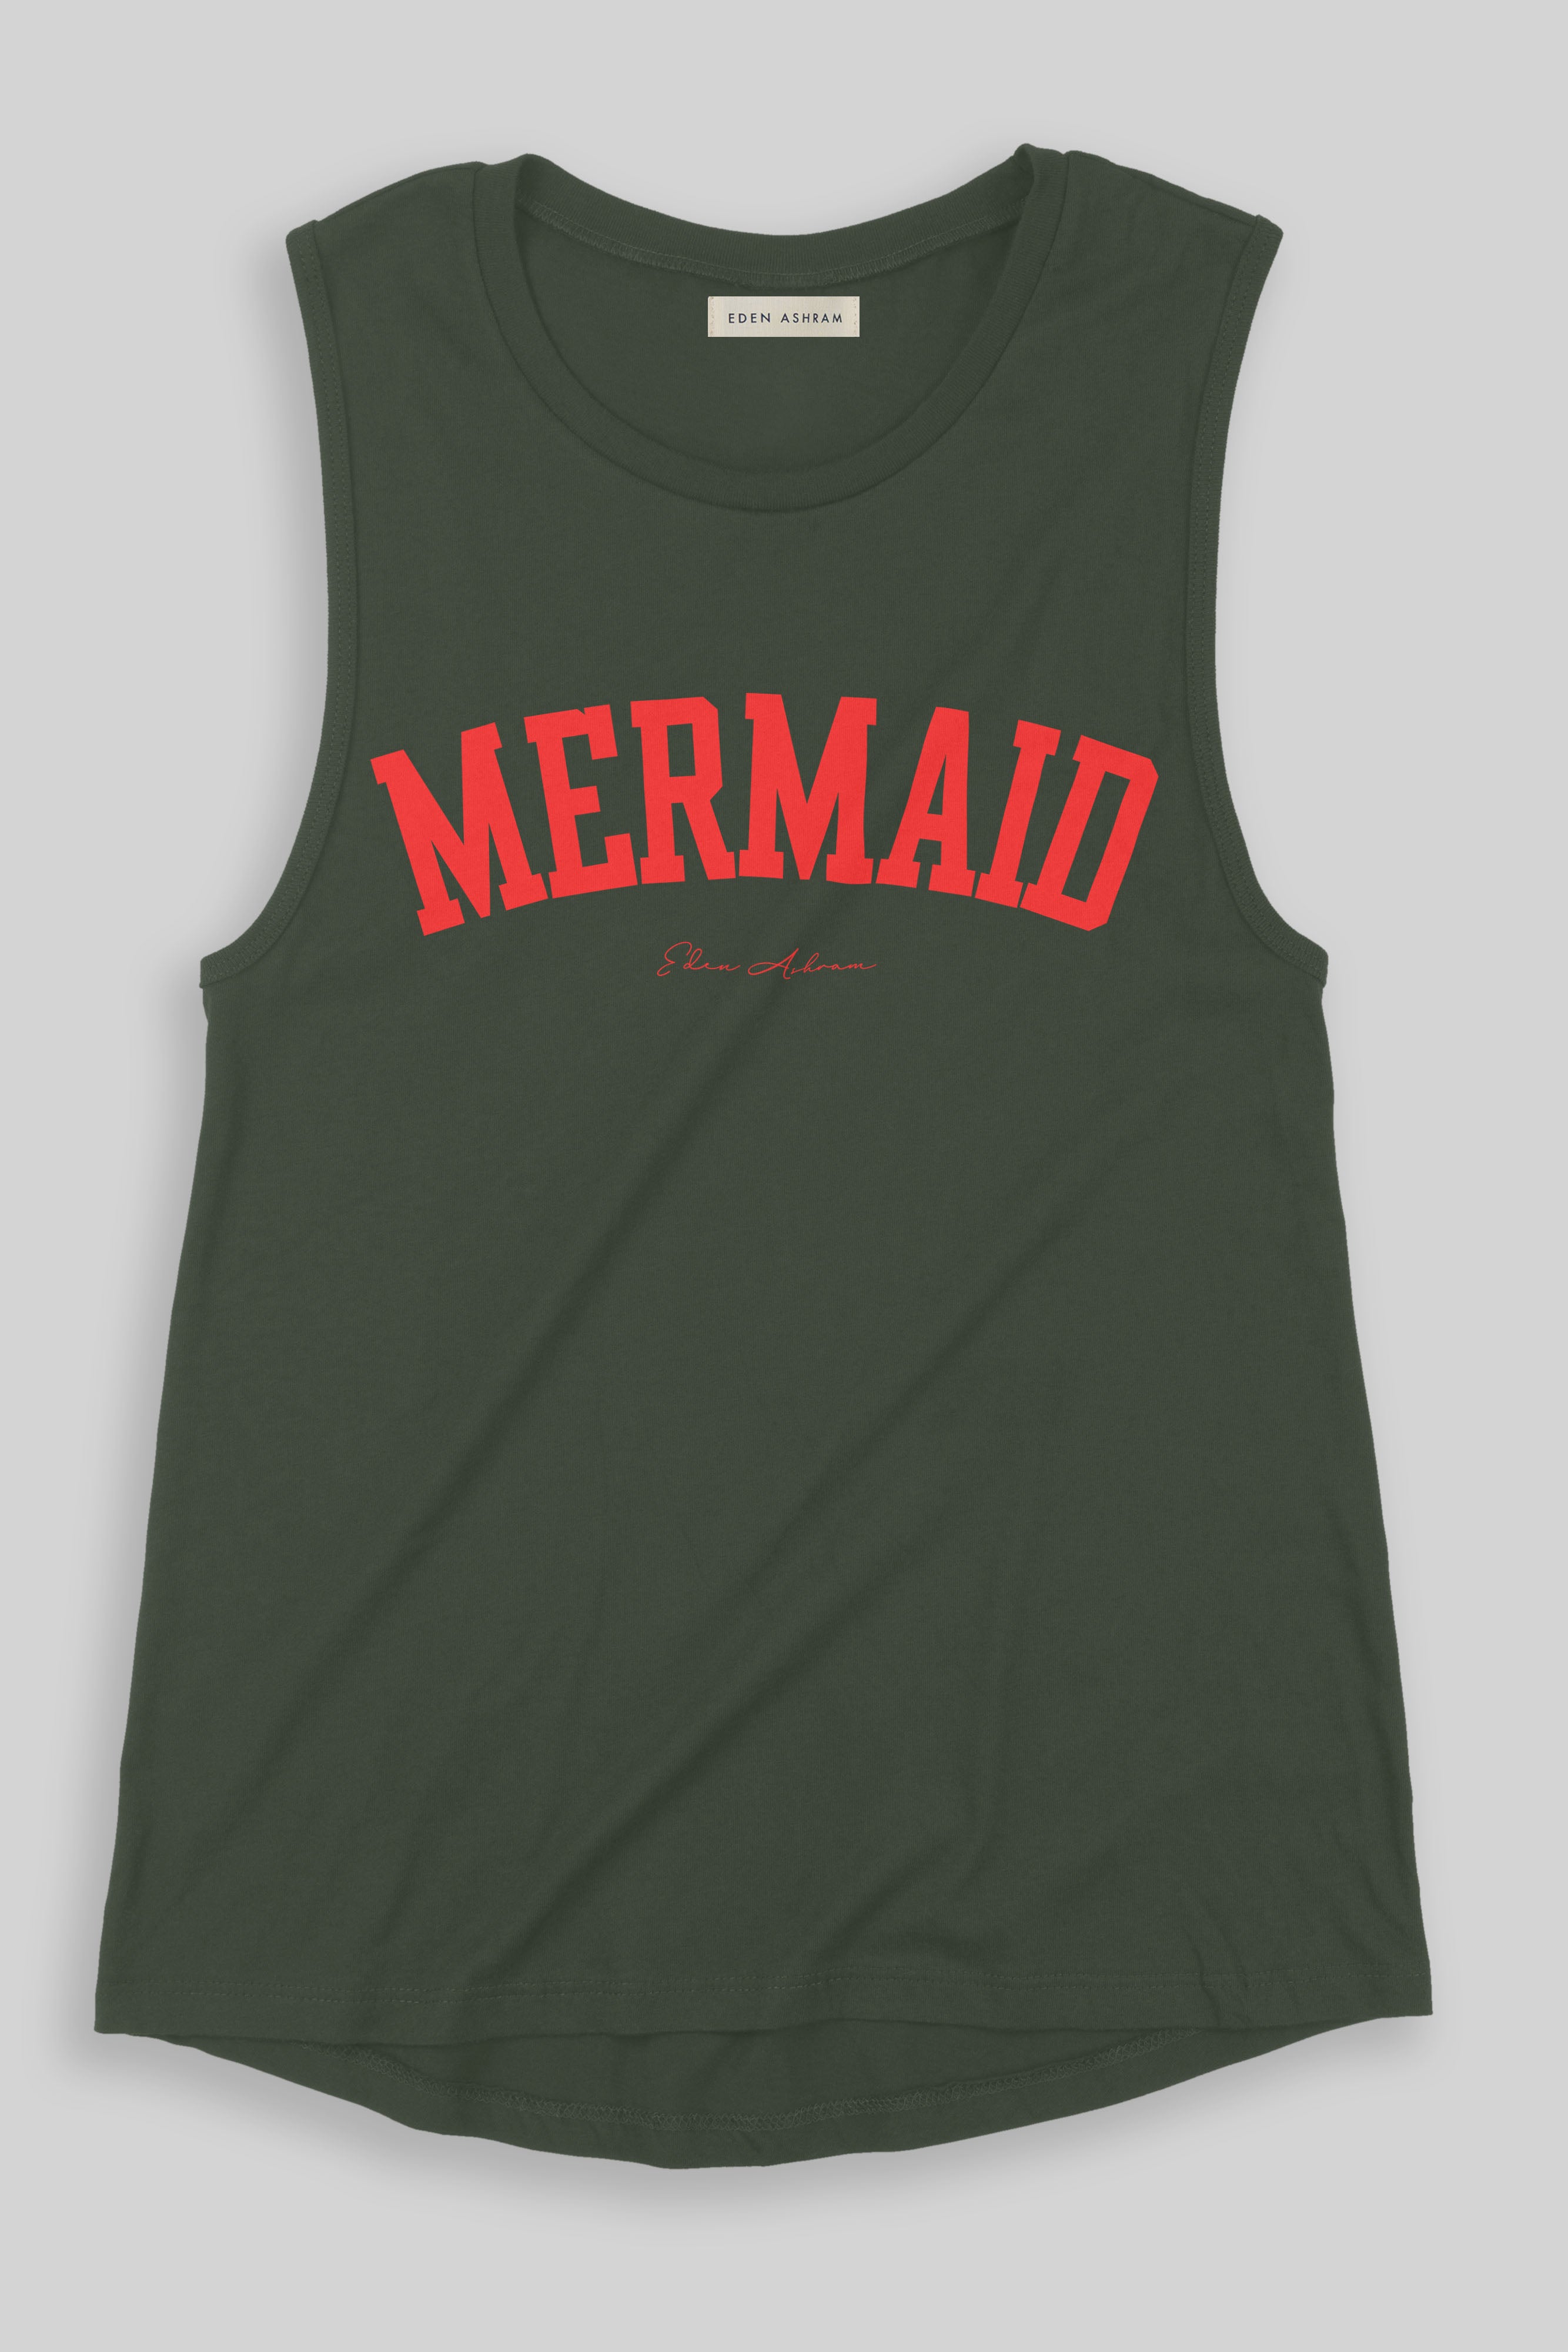 EDEN ASHRAM Mermaid Jersey Muscle Tank Army Green